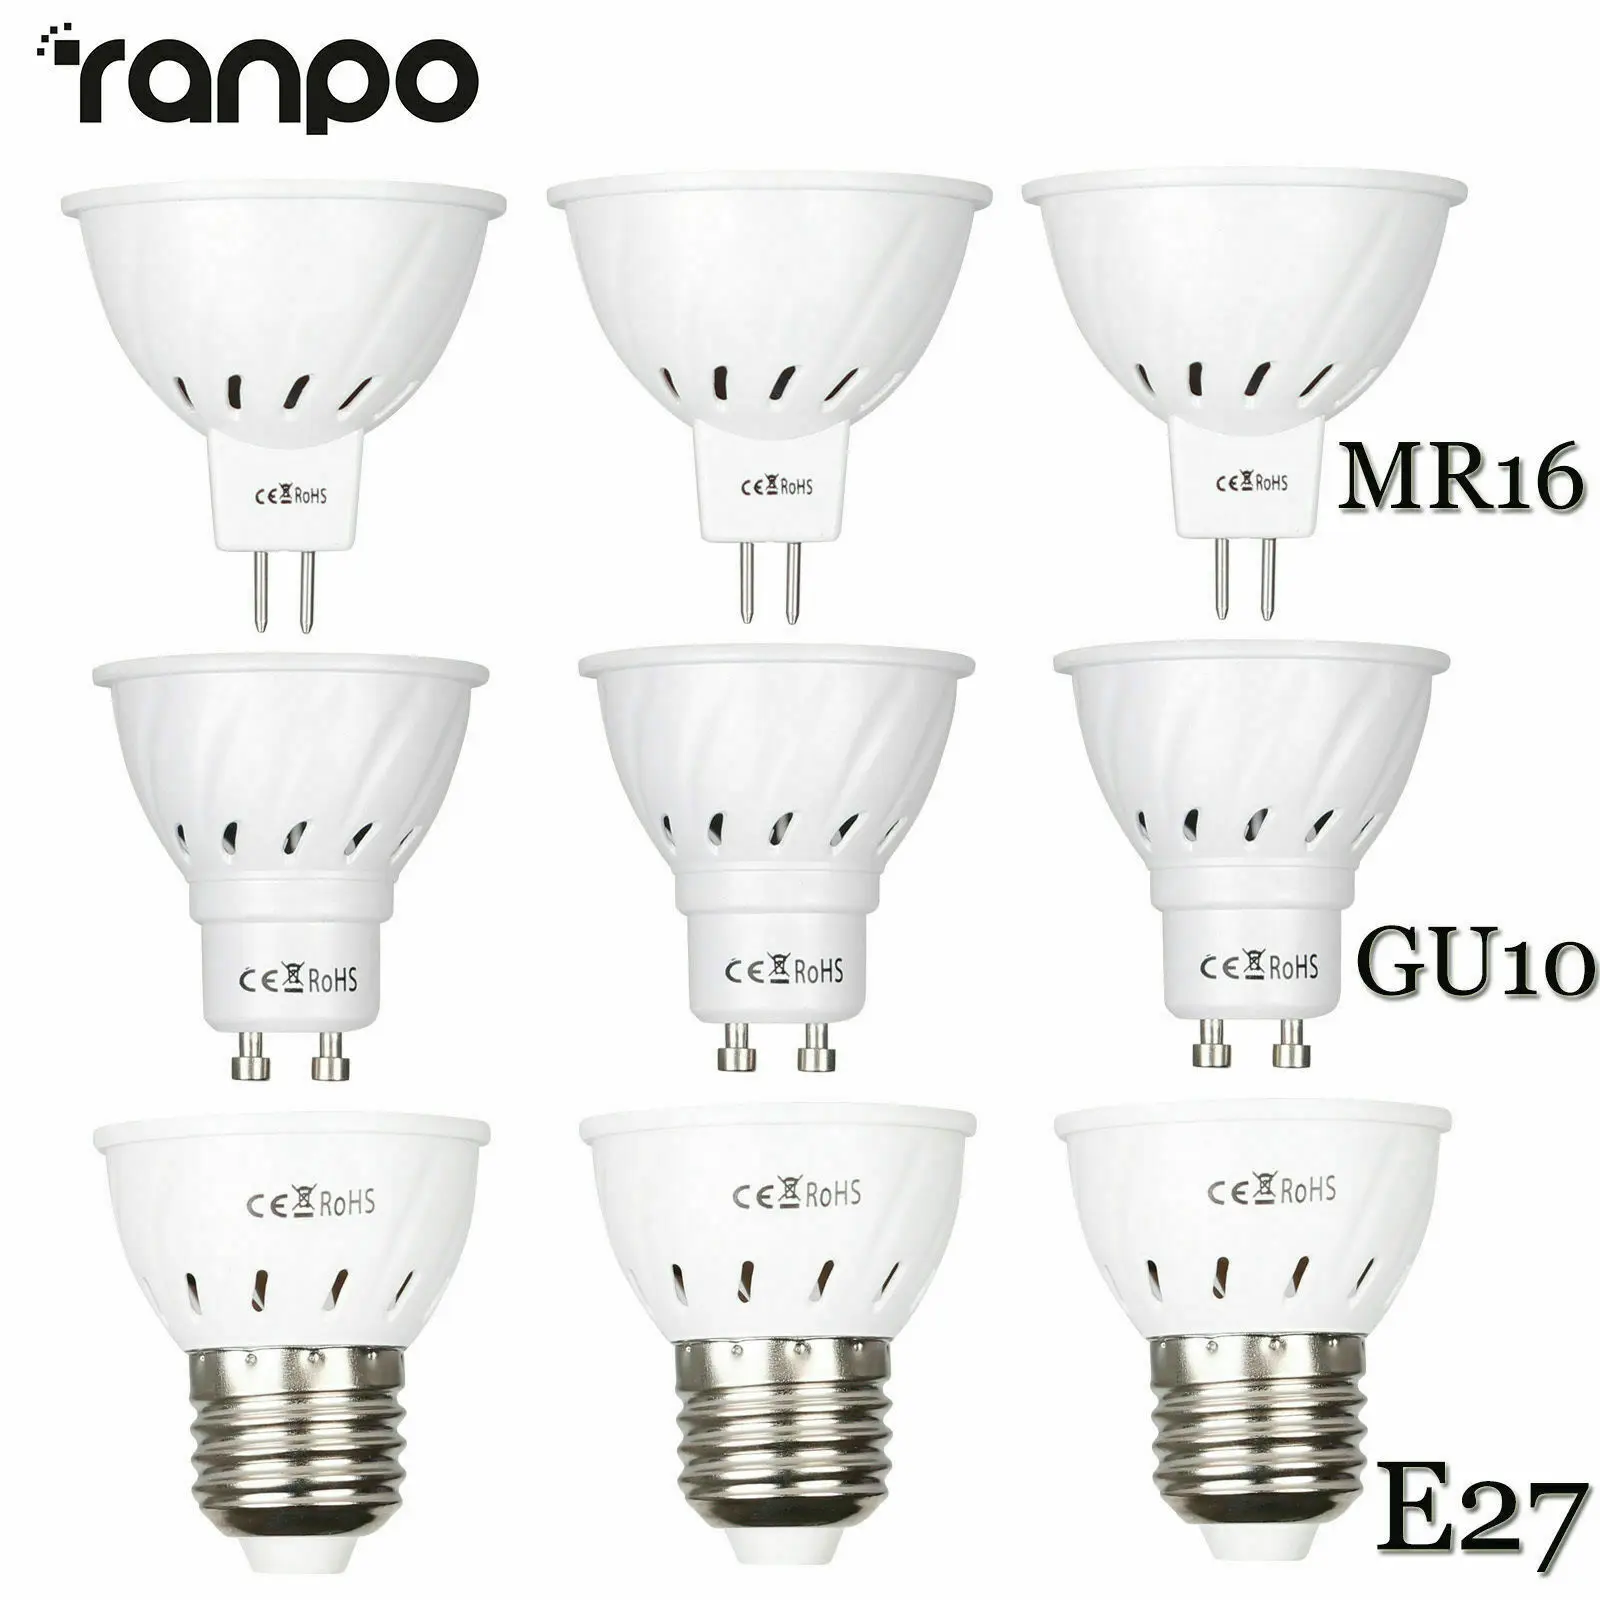 

4PCS LED Spotlight GU10 E27 MR16 LED Lamp Bulb 4W 6W 8W 36/54/72LEDs 2835 SMD LED Diode Lamp for Home Lampada 220V 110V DC12-24V